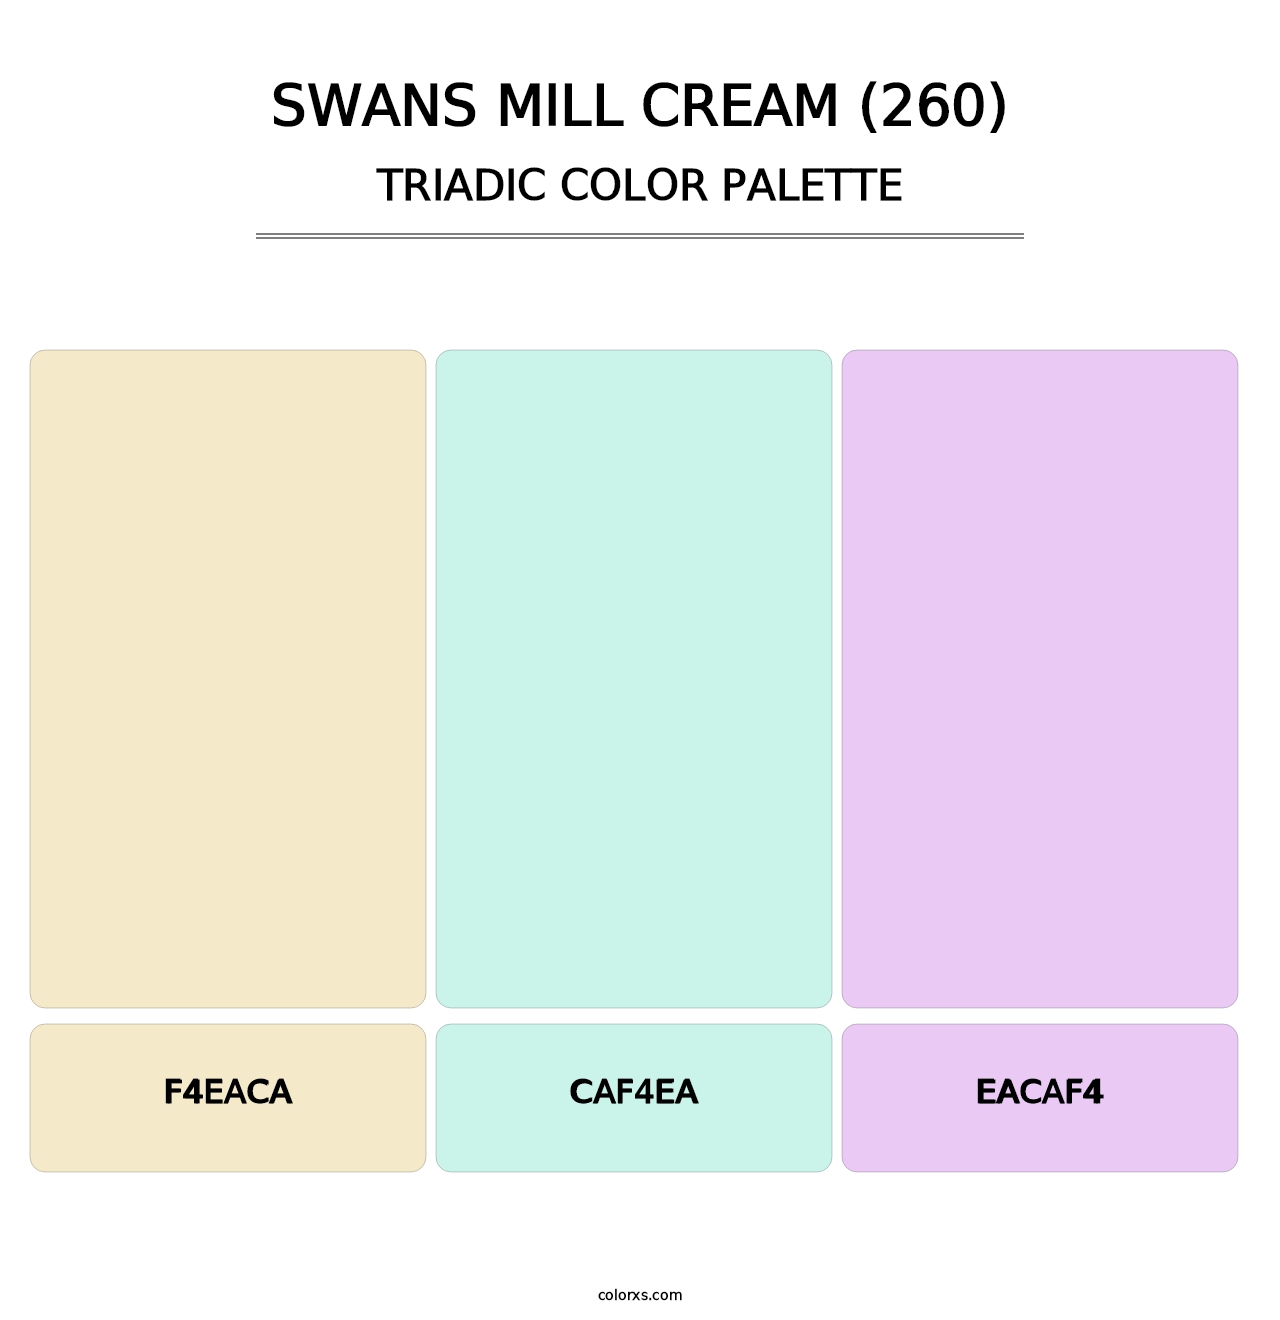 Swans Mill Cream (260) - Triadic Color Palette